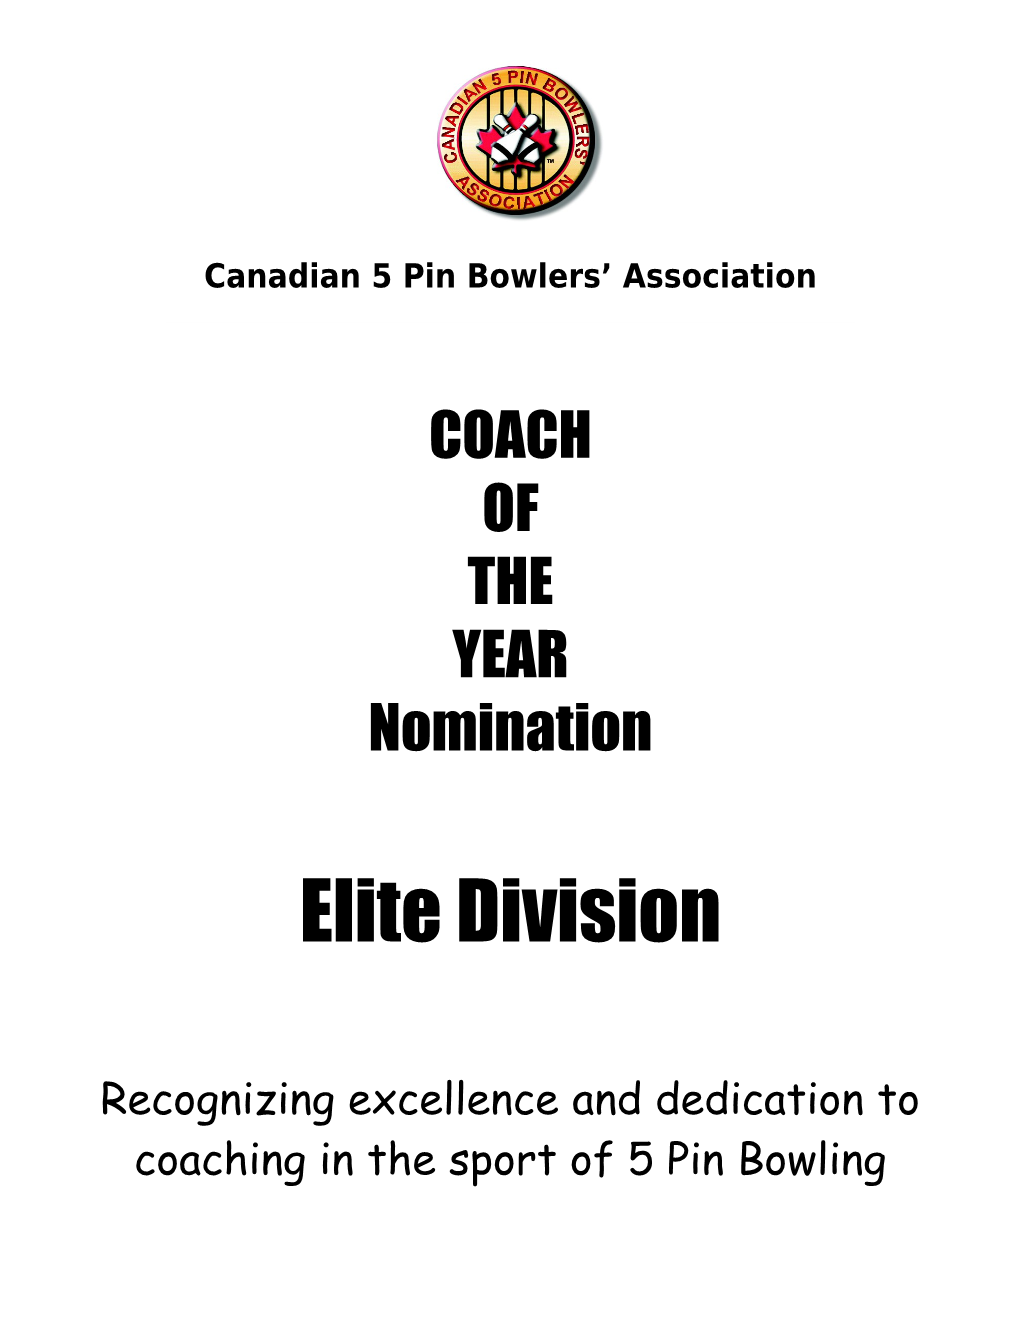 Canadian 5 Pin Bowlers Association